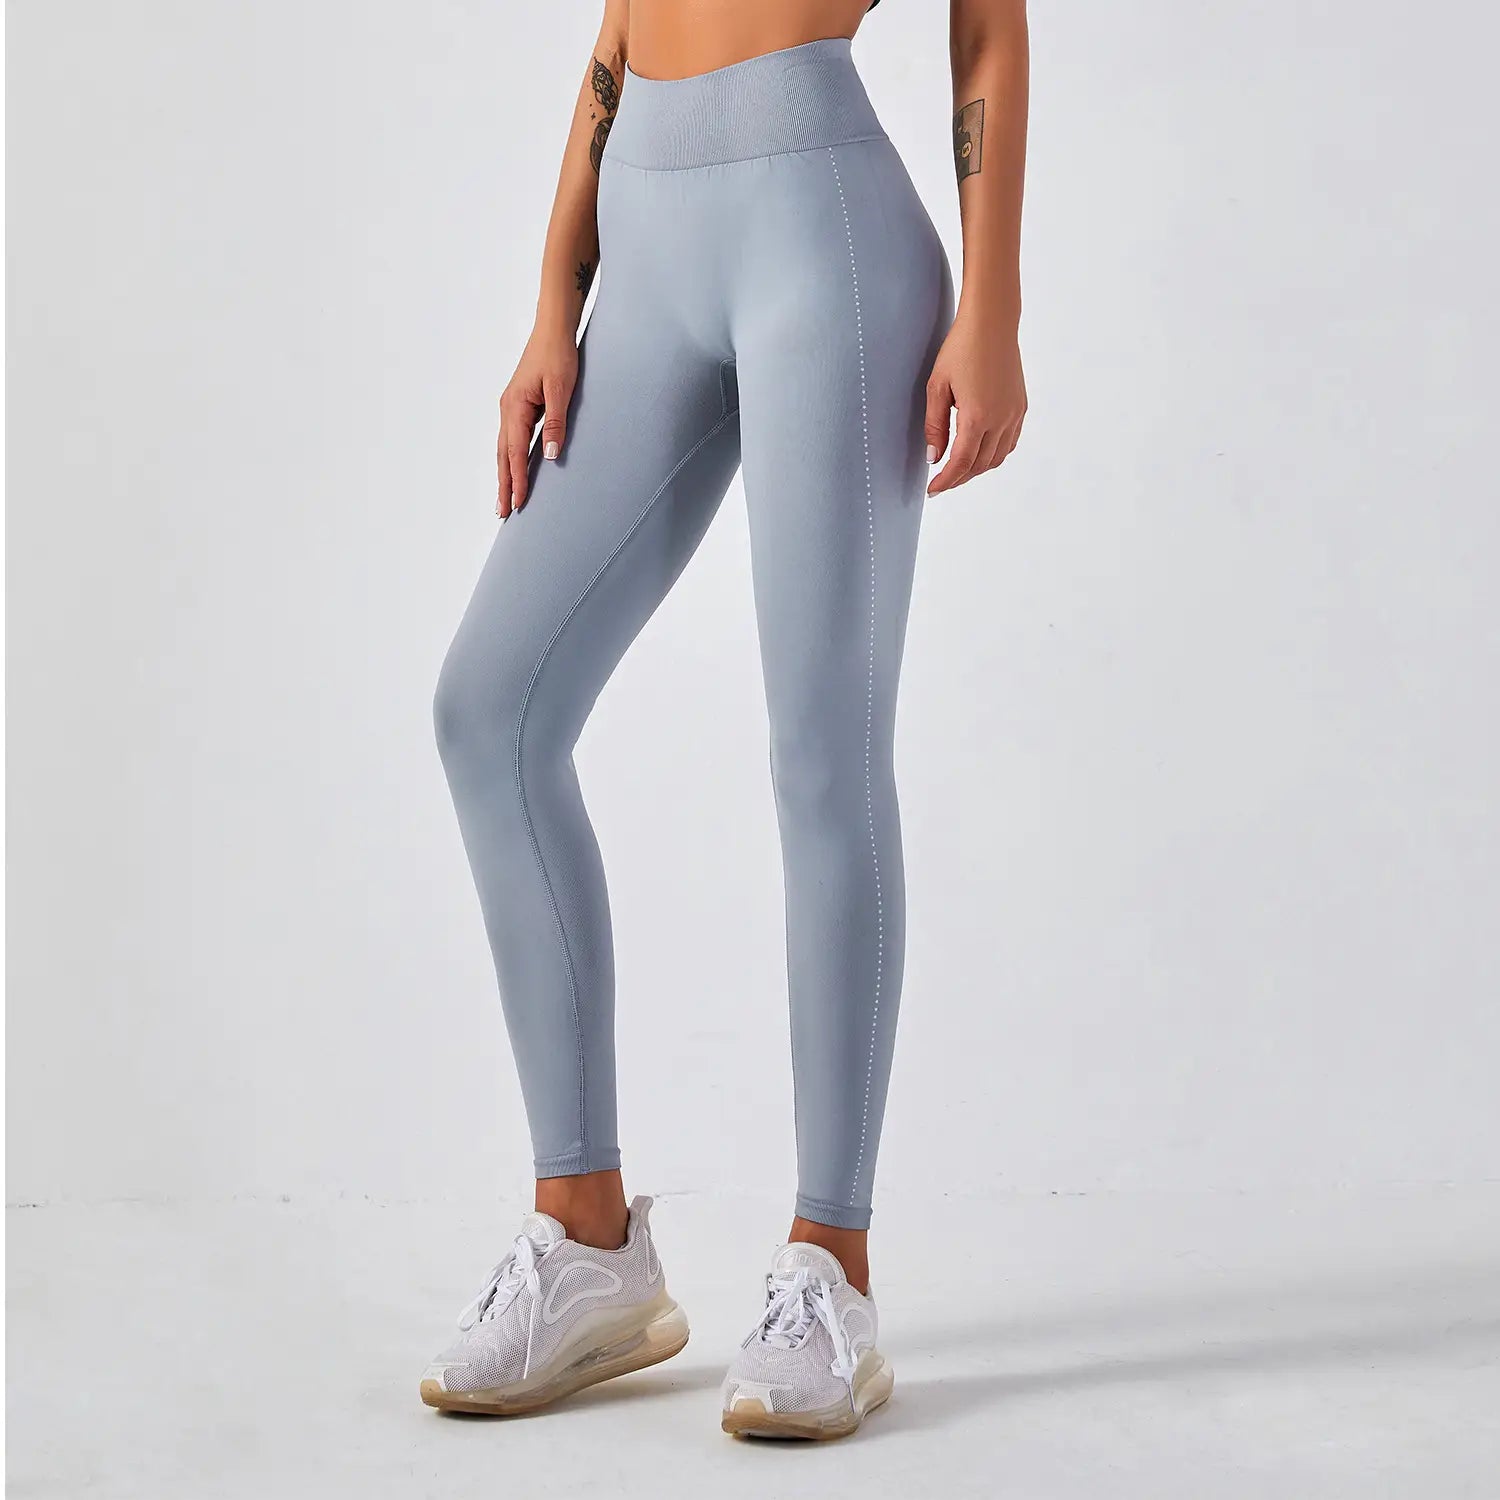 Lovemi - Tight seamless yoga pants